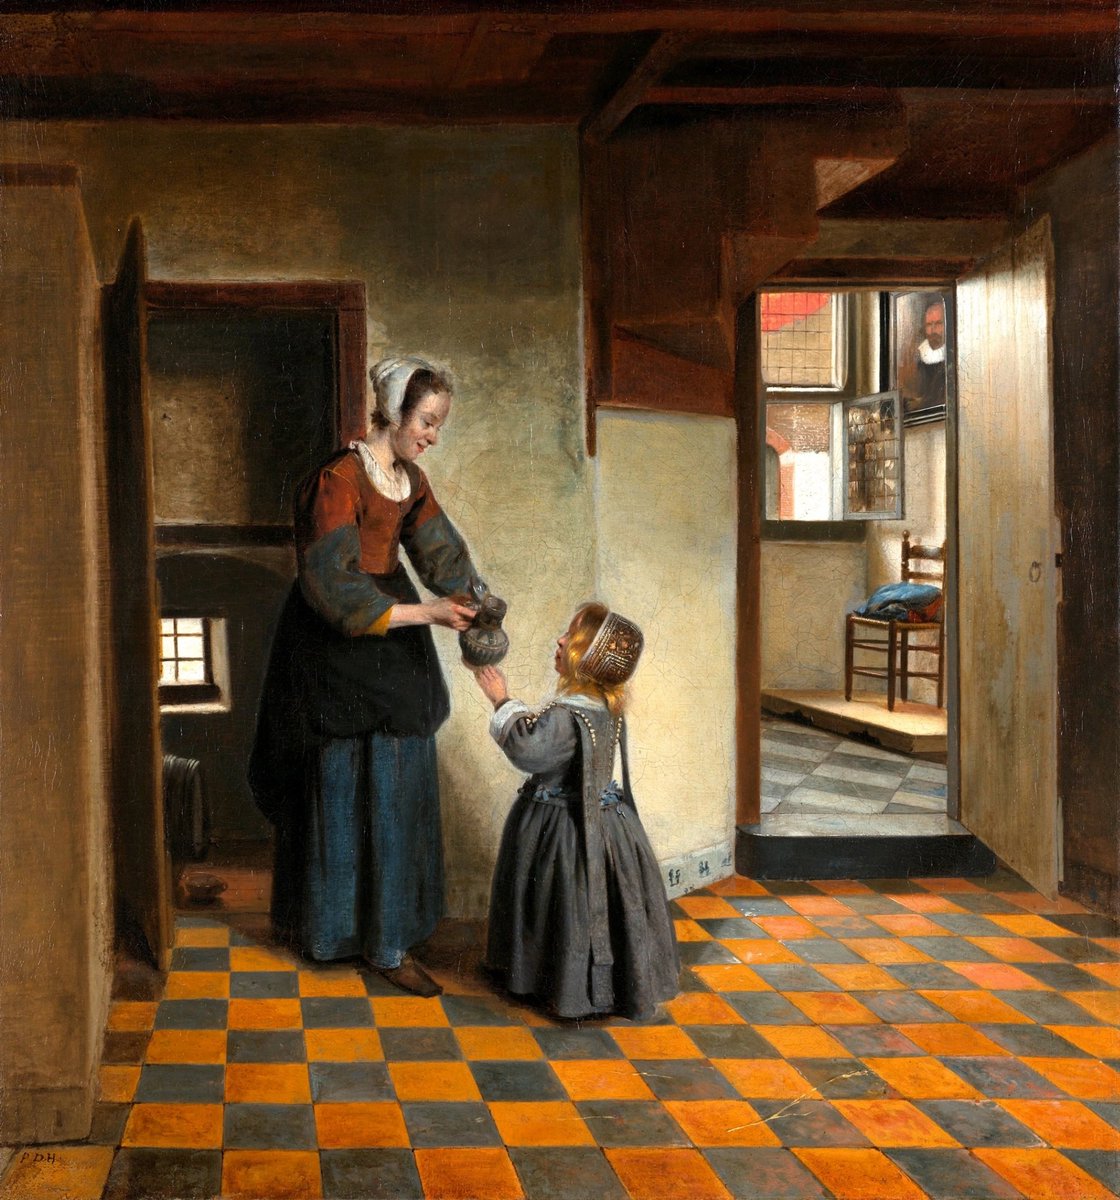 Woman with child in pantry Pieter de Hooch (1629-1684) 1658 Canvas, oil 65 x 60.5 cm Rijksmuseum (Amsterdam) #artist #painting #the19thcenturyart #art #ArtliveAndBeauty #paintingoftheday